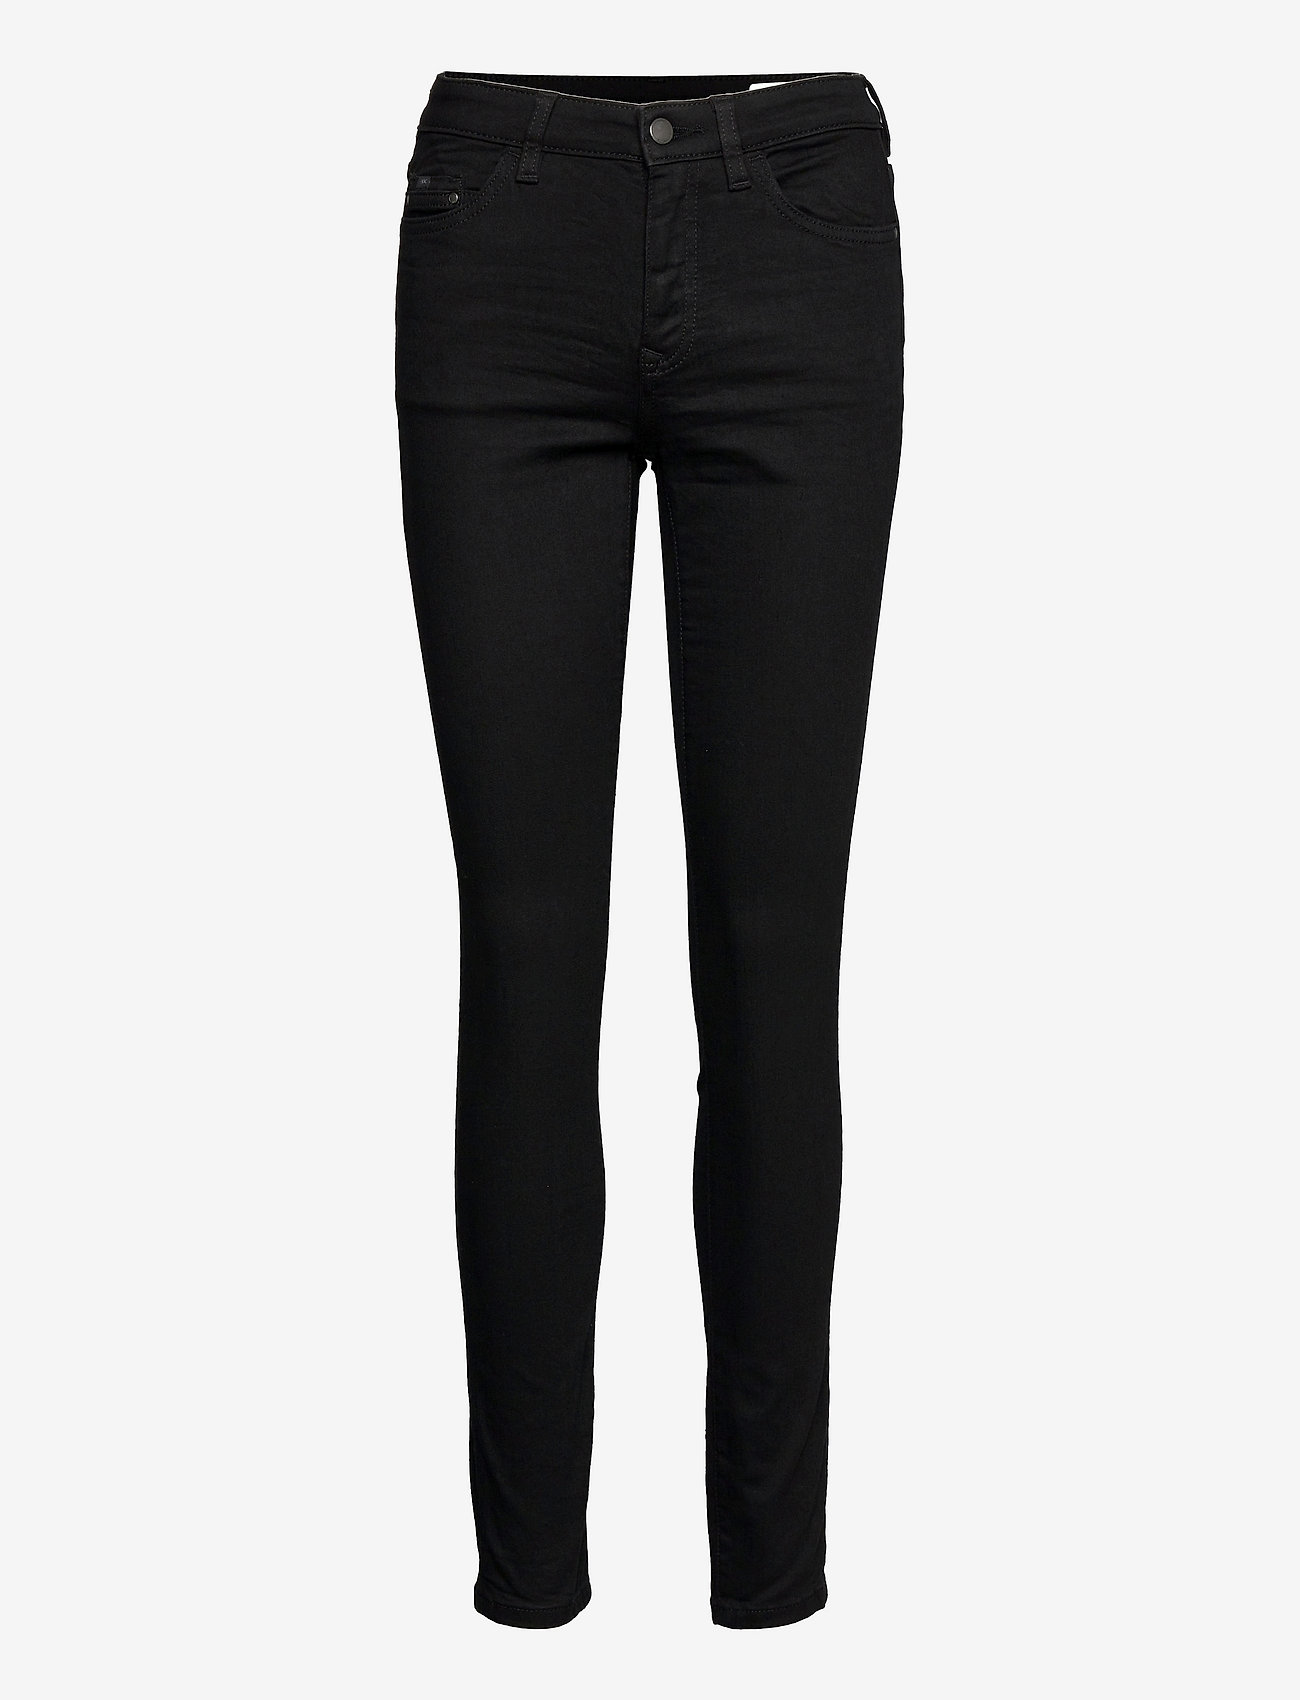 EDC by Esprit Pants Denim - Skinny jeans | Boozt.com